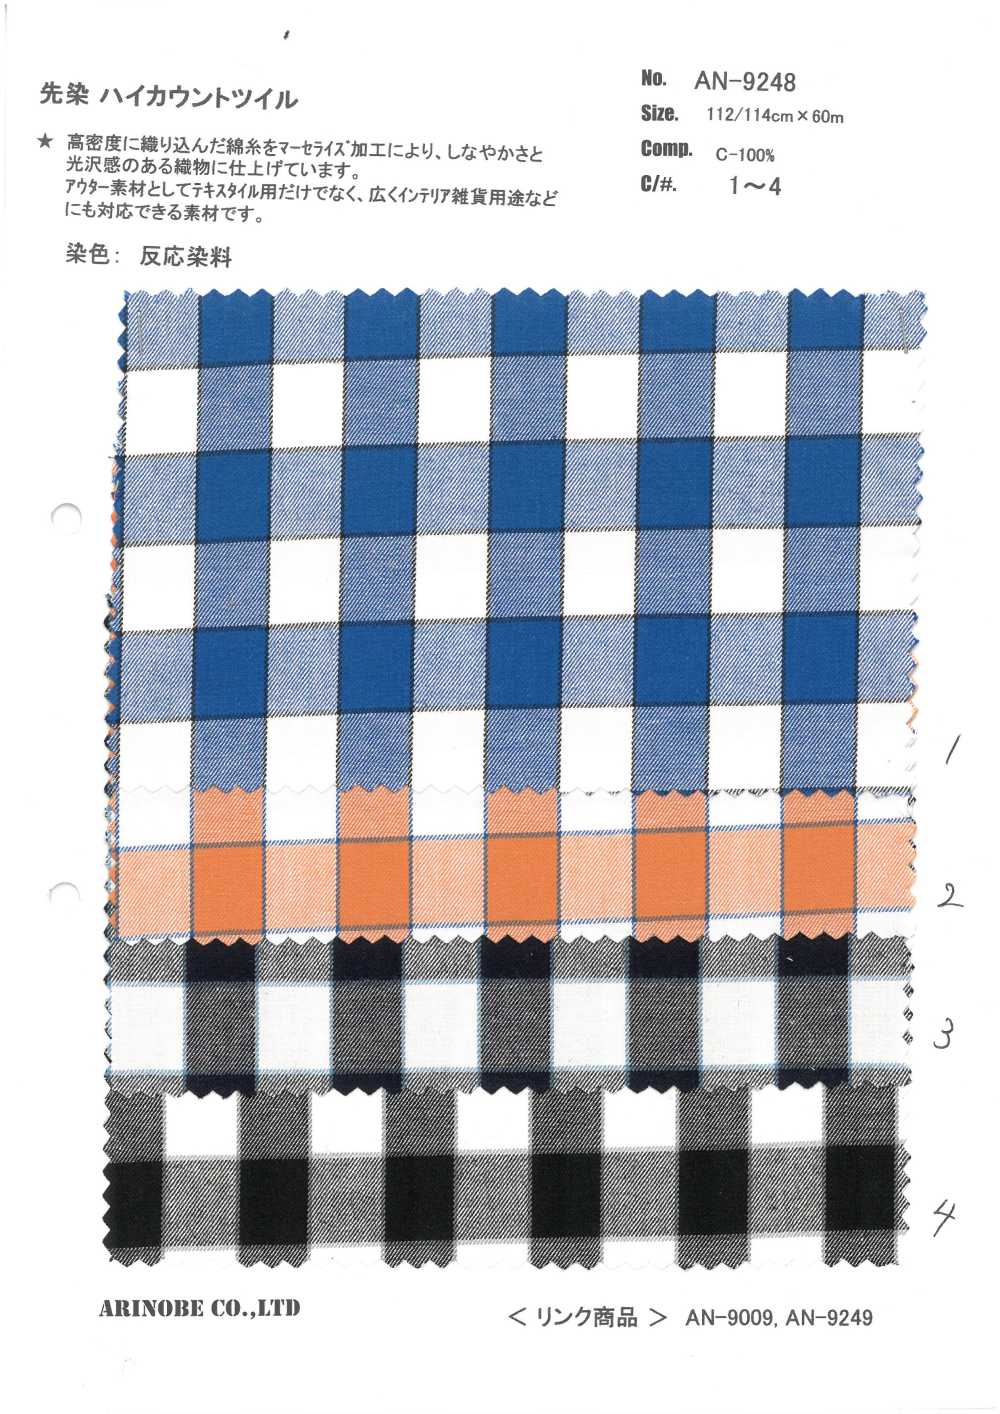 AN-9248 Yarn- Yarn Dyed High-count Twill[Textile / Fabric] ARINOBE CO., LTD.